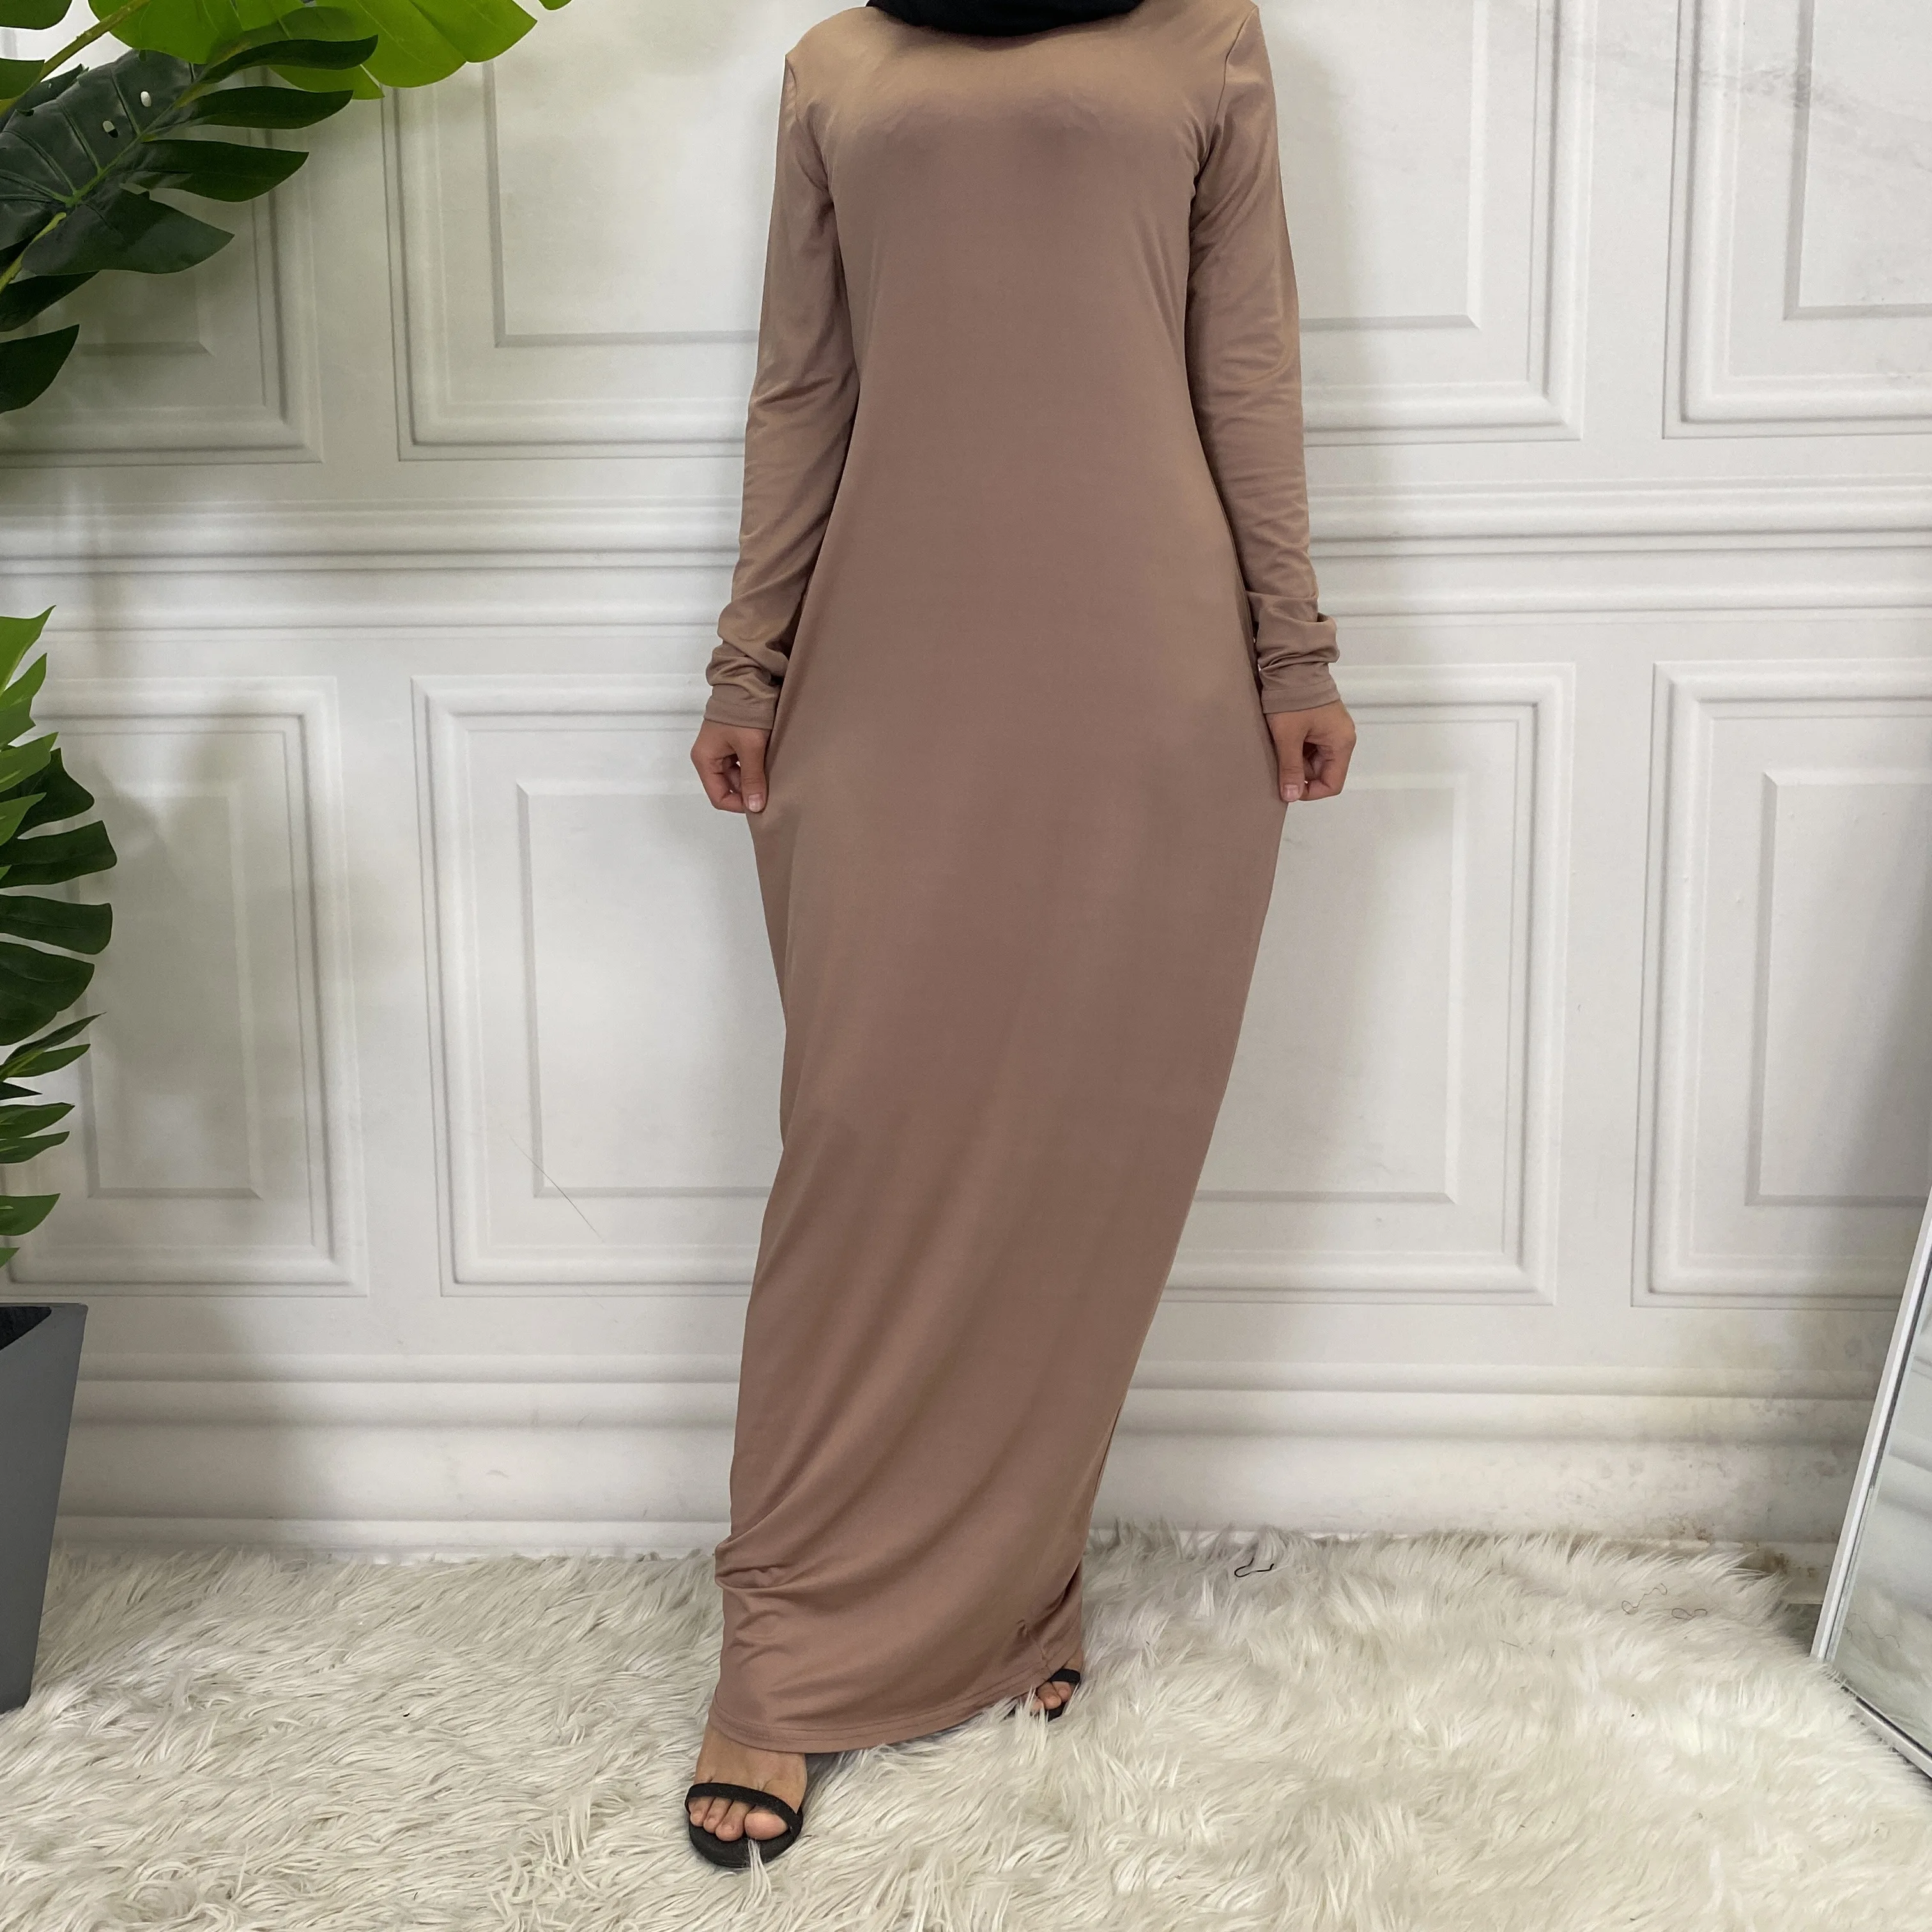 Summer Skirt For Ladies New Inner Dress Muslim Casual Dress For Women Clothing Islamic Abaya Long